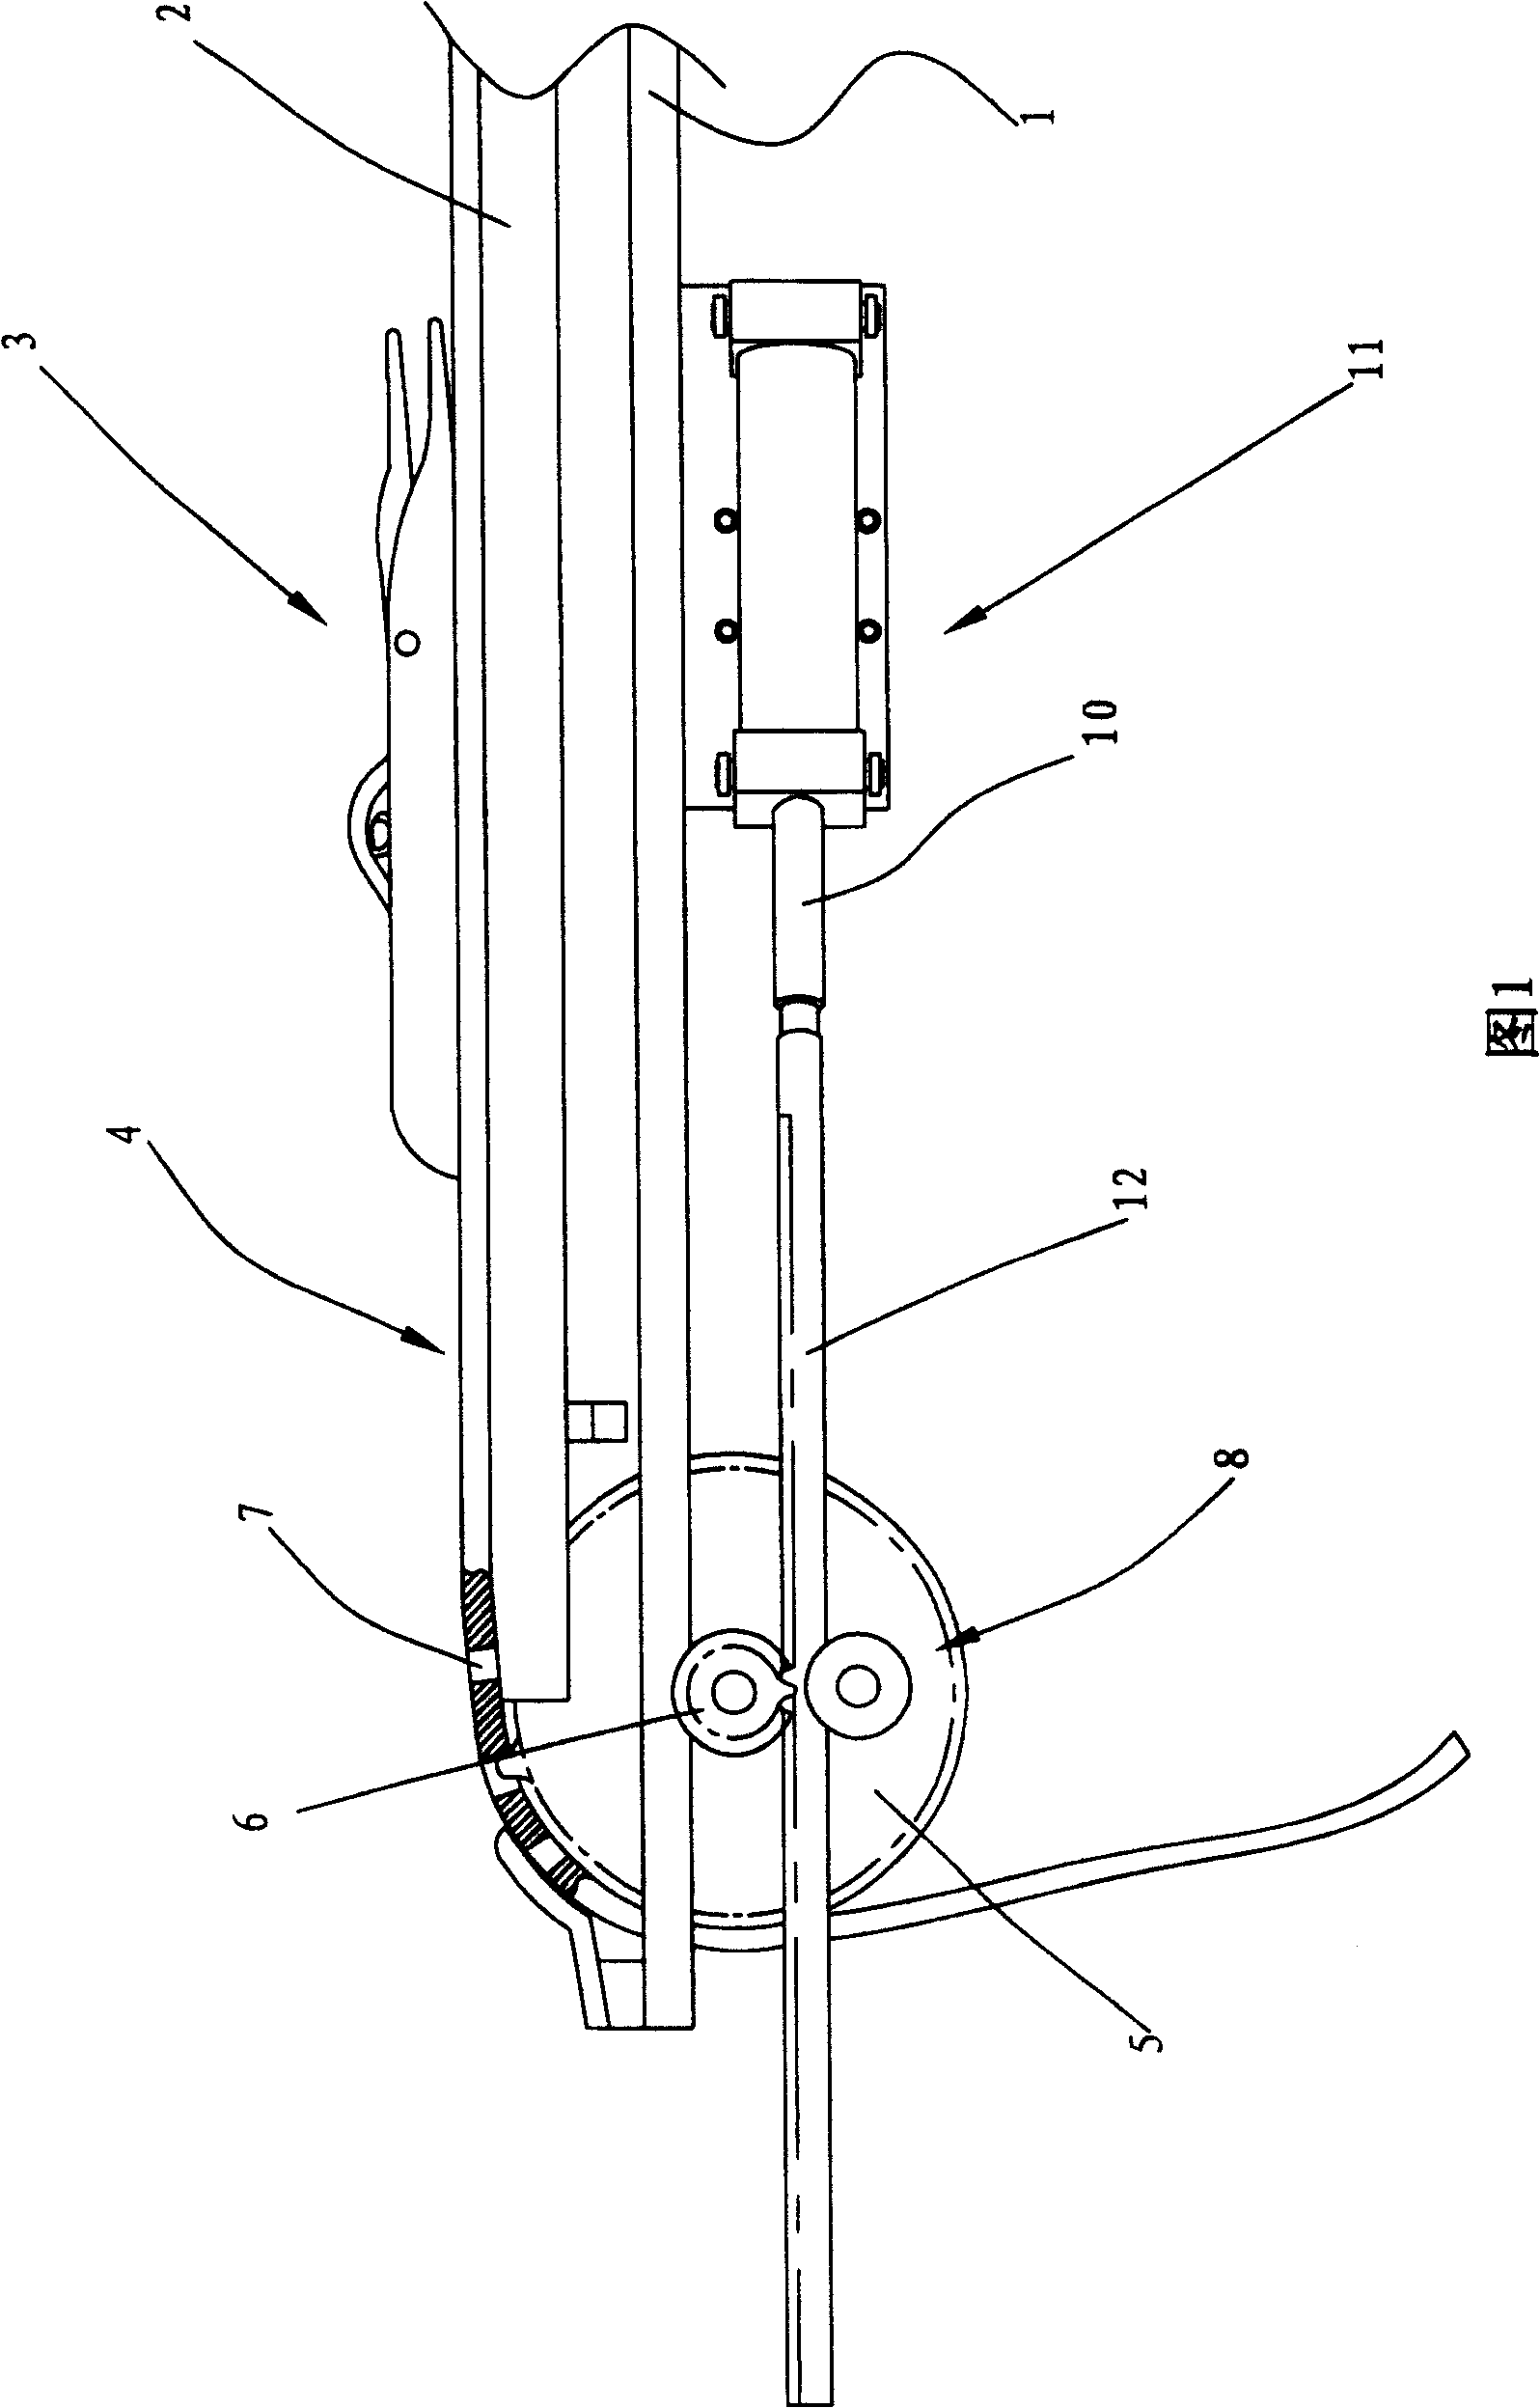 Transmission mechanism for curtain sheet weaving machine